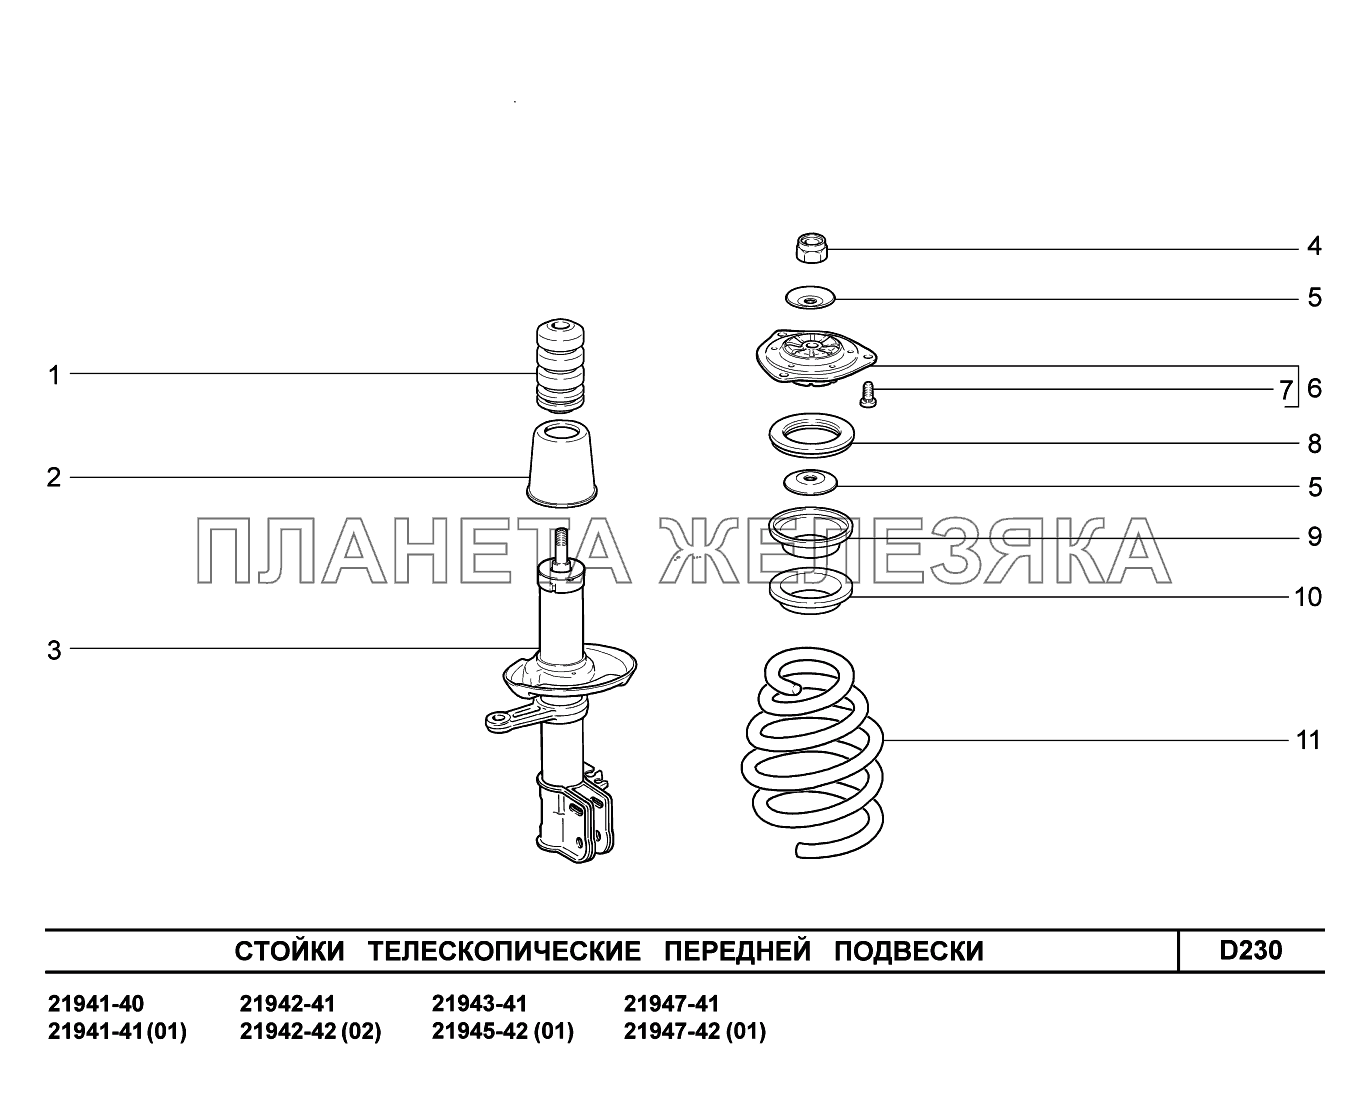 D230. Стойки телескопические передней подвески Lada Kalina New 2194